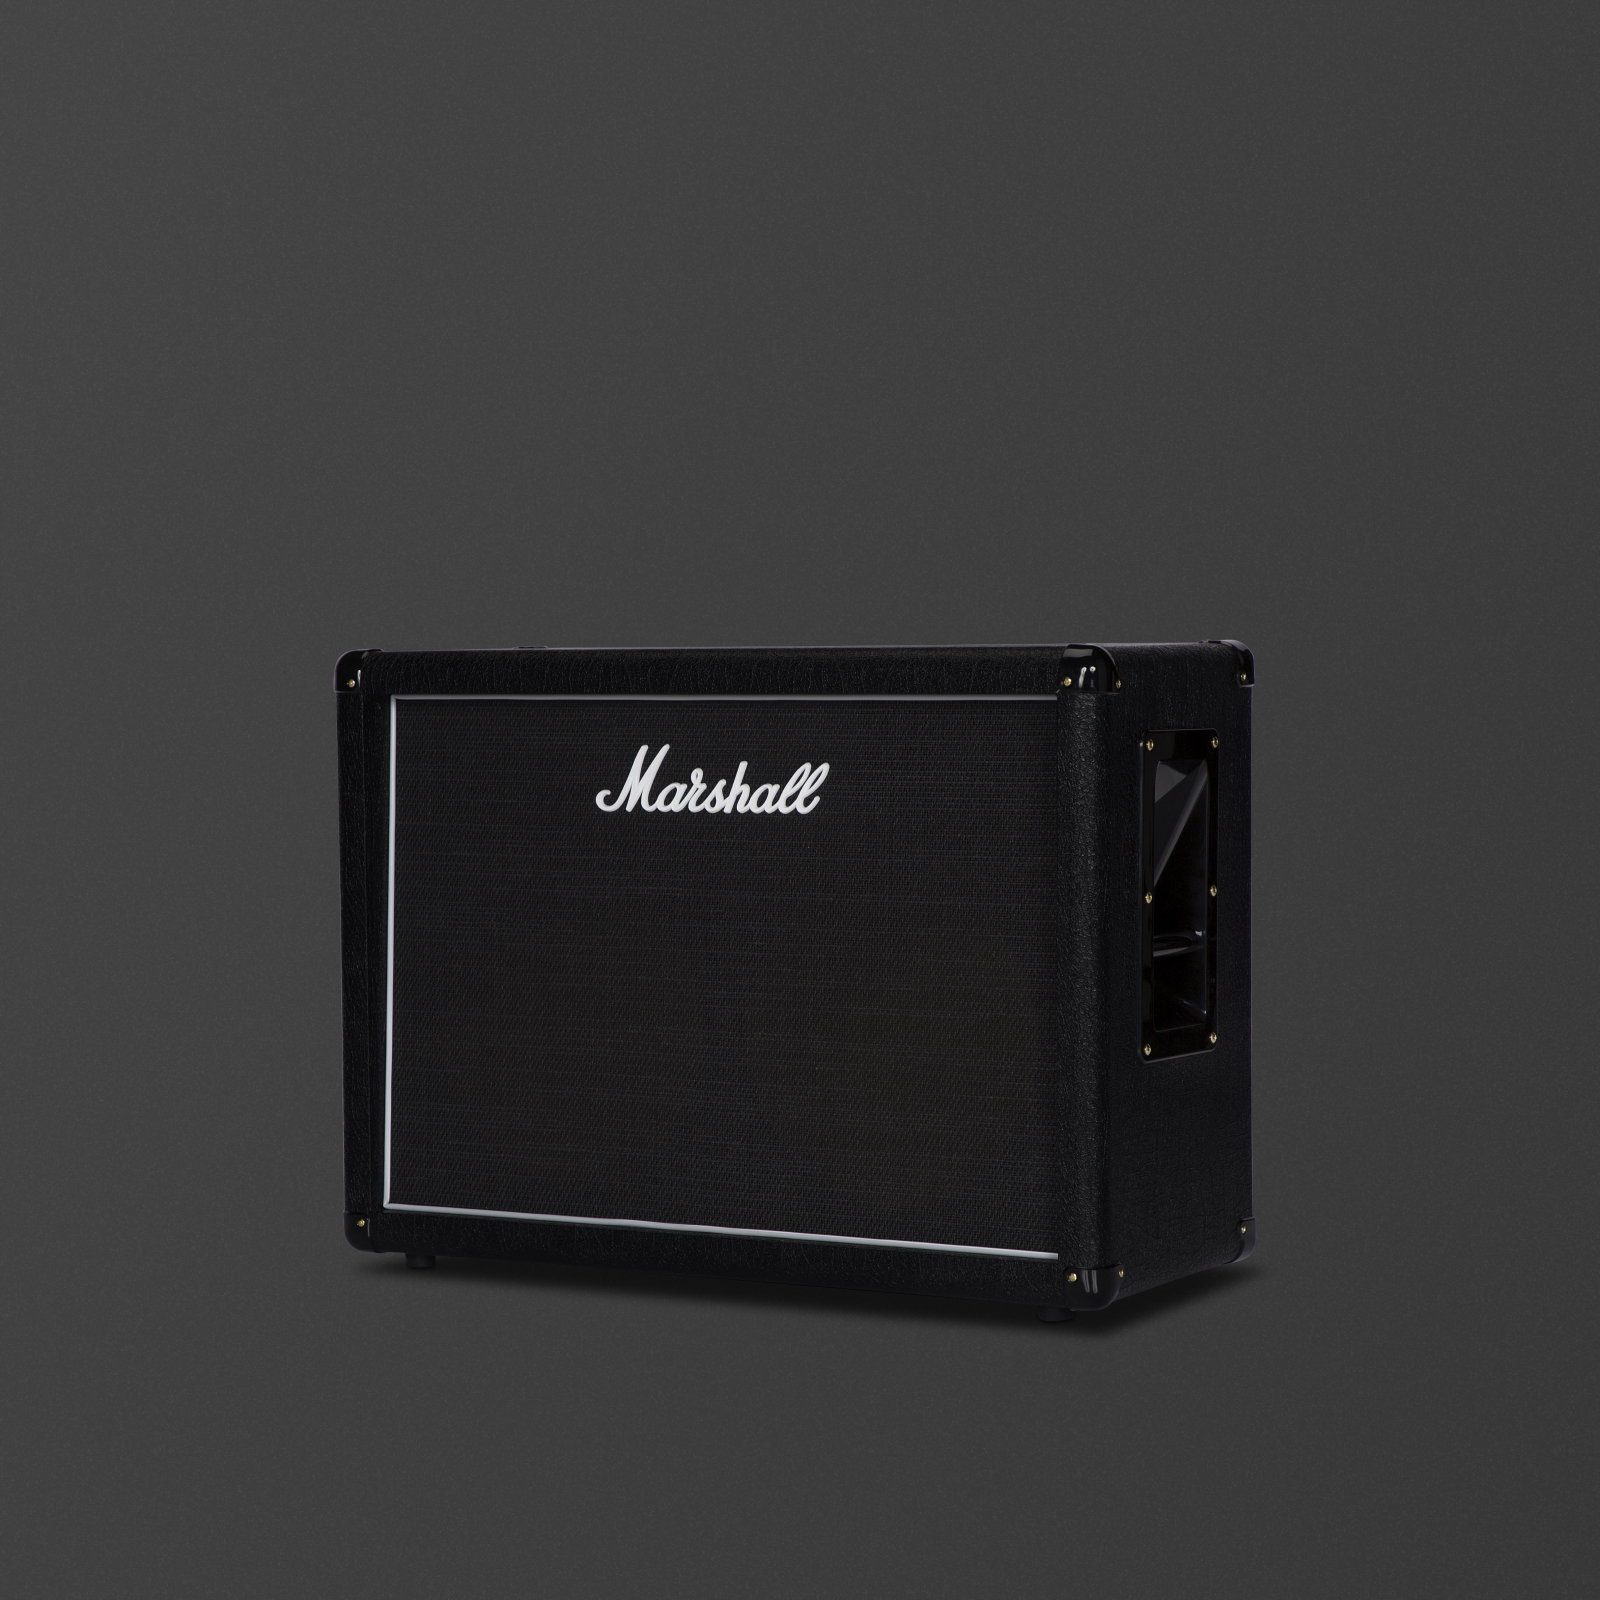 Caja negra MX212 de Marshall.  